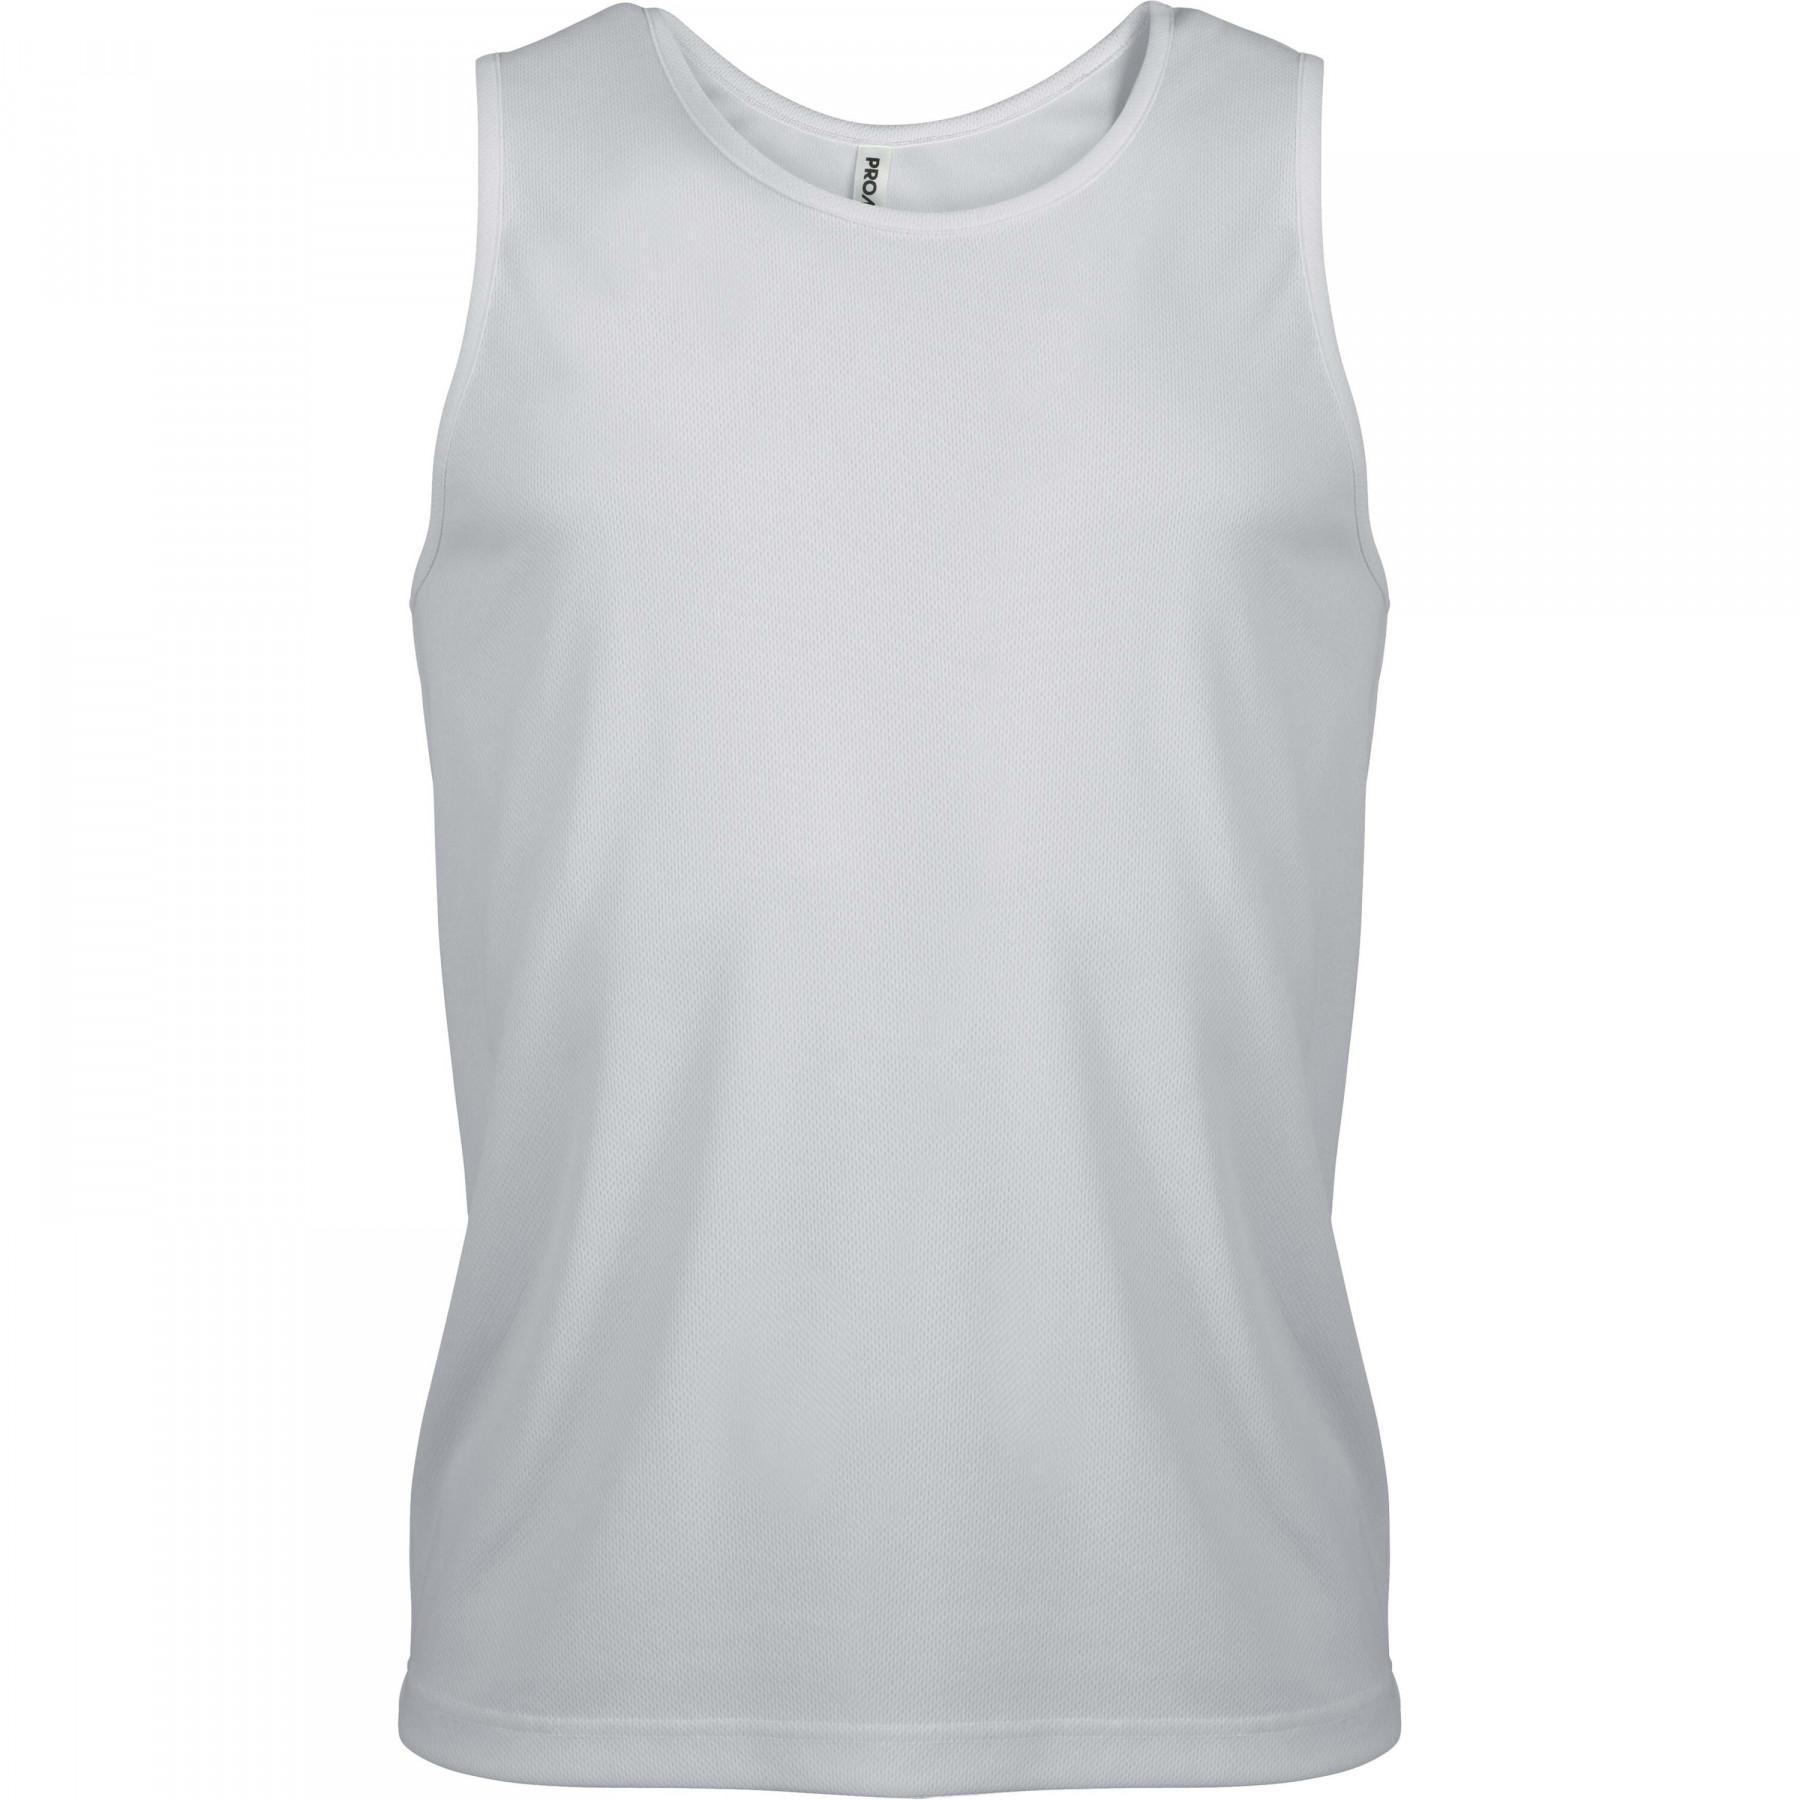 Camiseta deportiva sin mangas Proact blanc